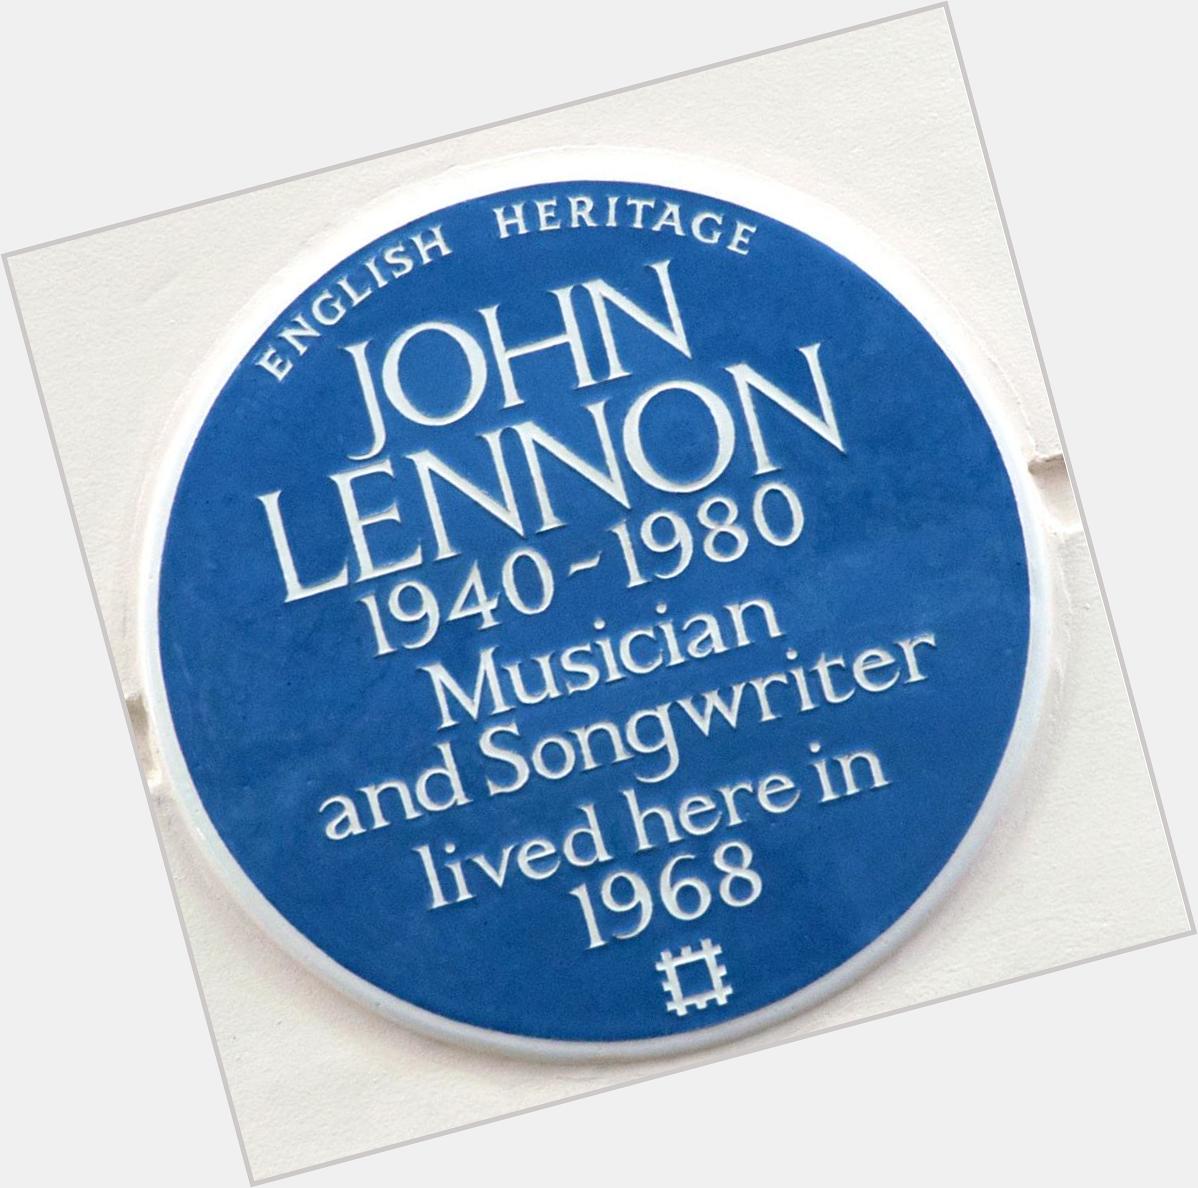 Happy 75th birthday John Lennon!  